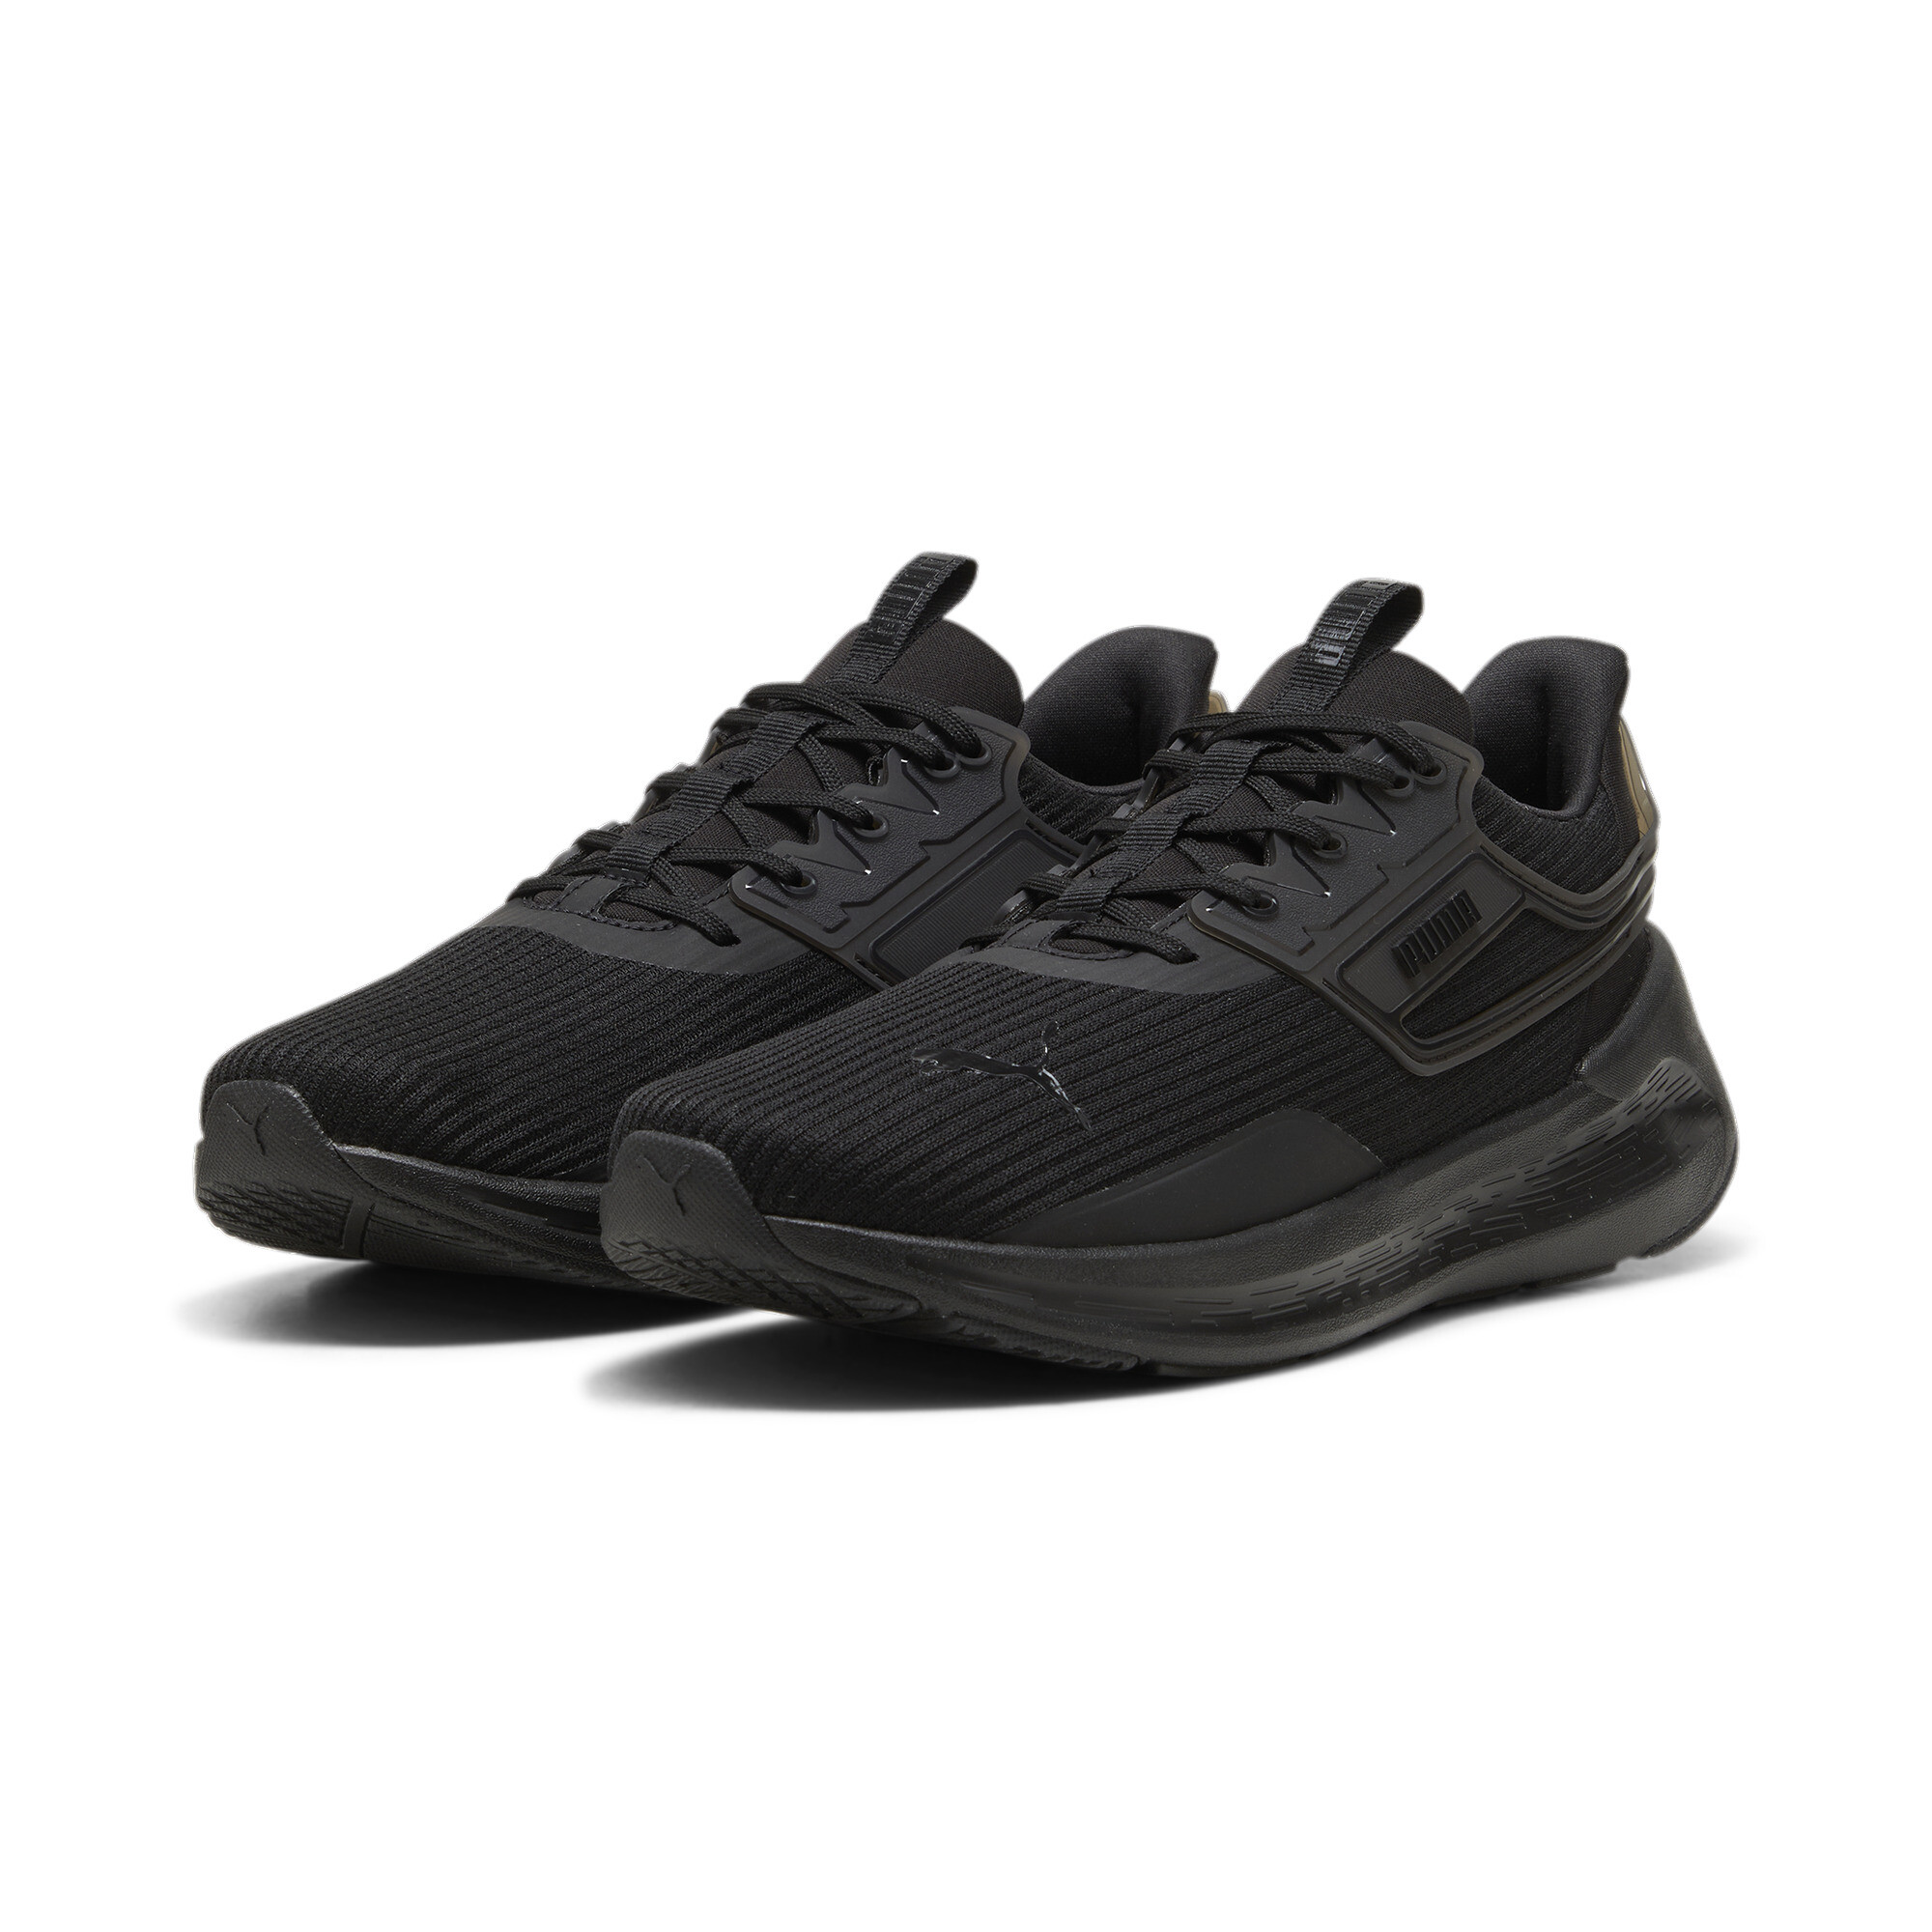 Men's PUMA SOFTRIDE Symmetry Running Shoes In 10 - Black, Size EU 37.5